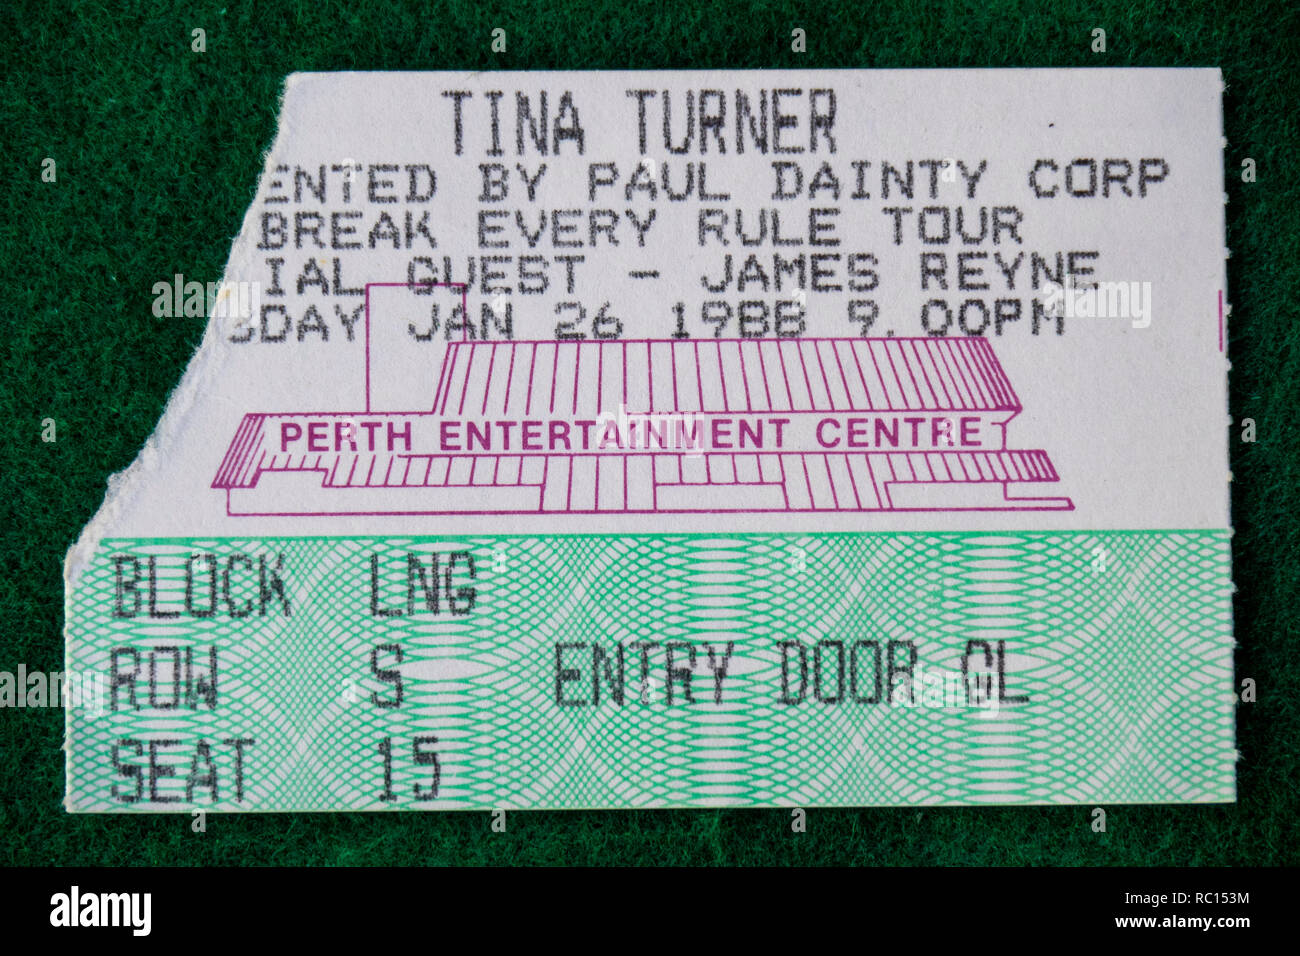 Ticket for Tina Turner concert at Perth Entertainment Centre in 1988 WA Australia. Stock Photo